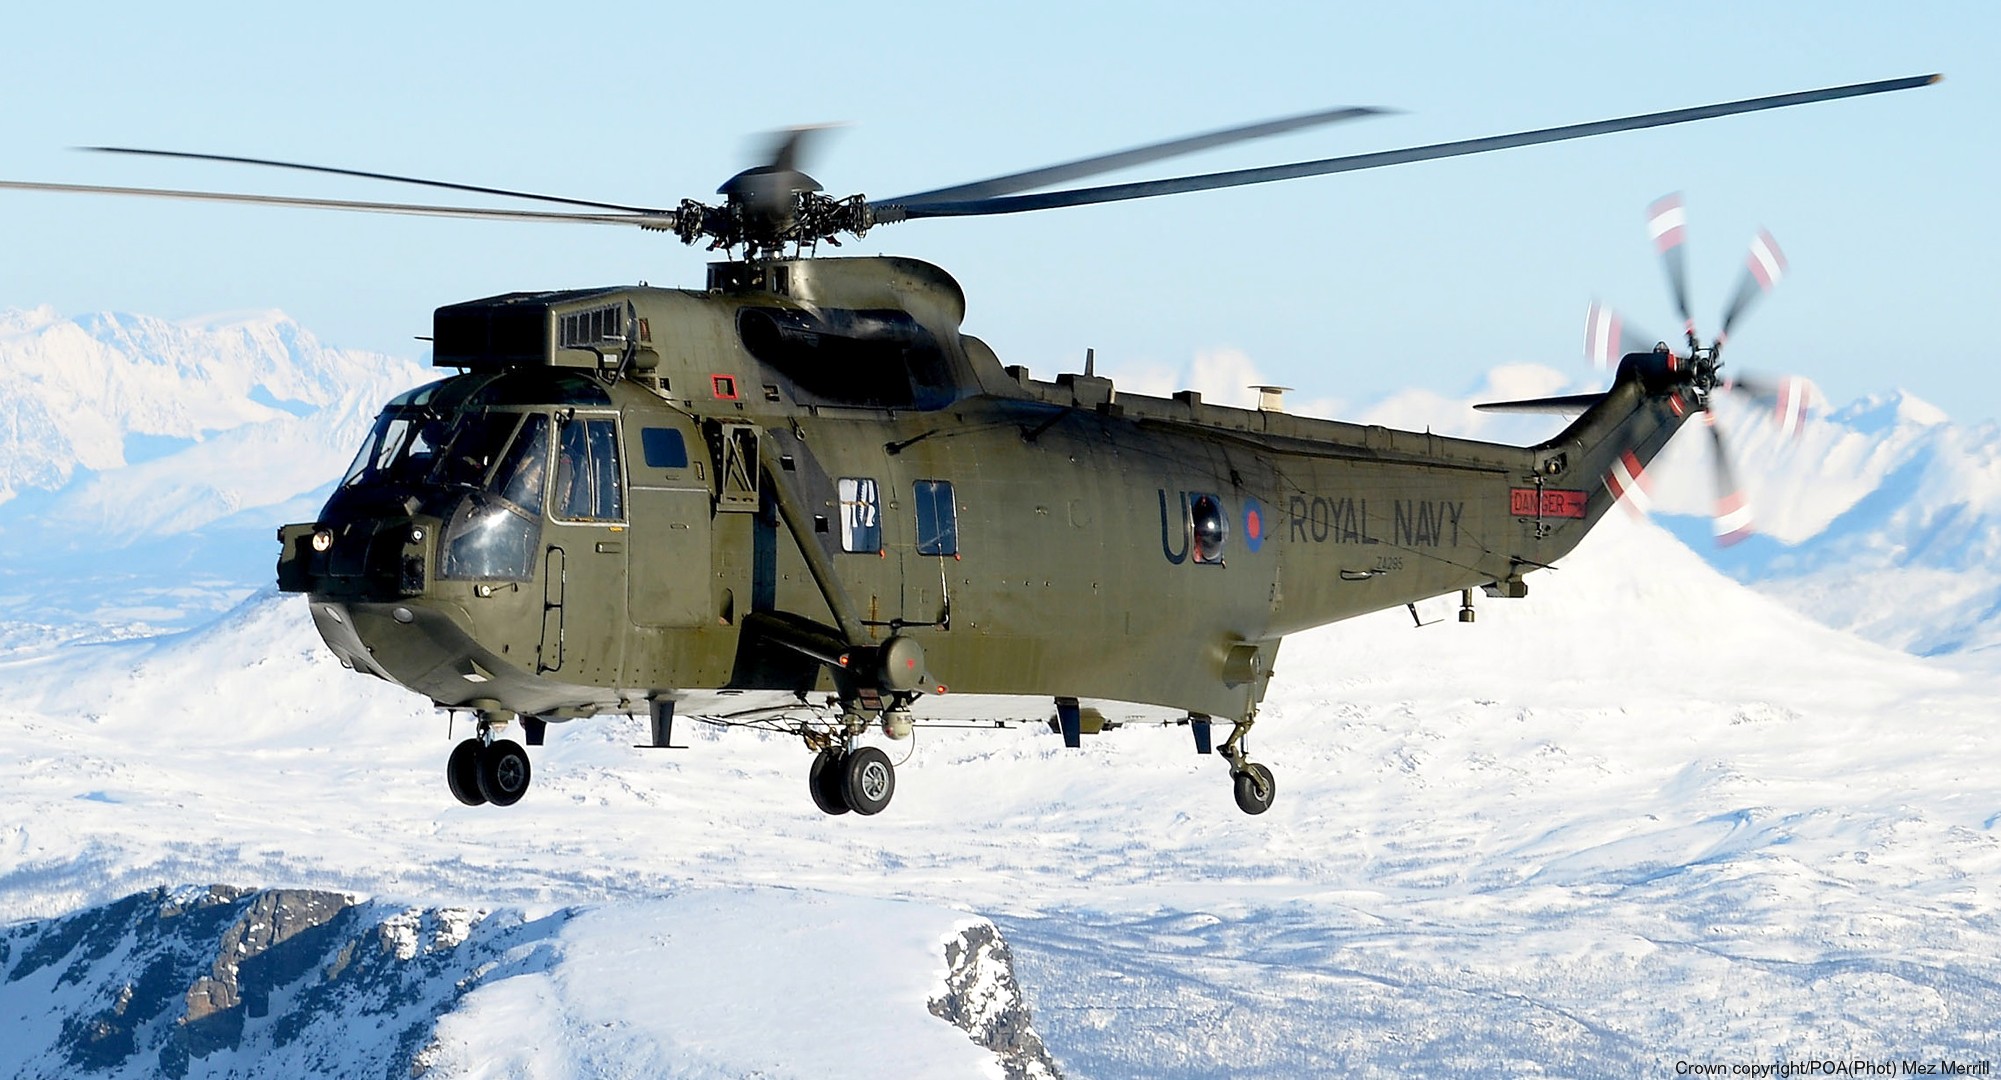 sea king hc.4 helicopter royal navy commando assault marines westland nas squadron rnas 36